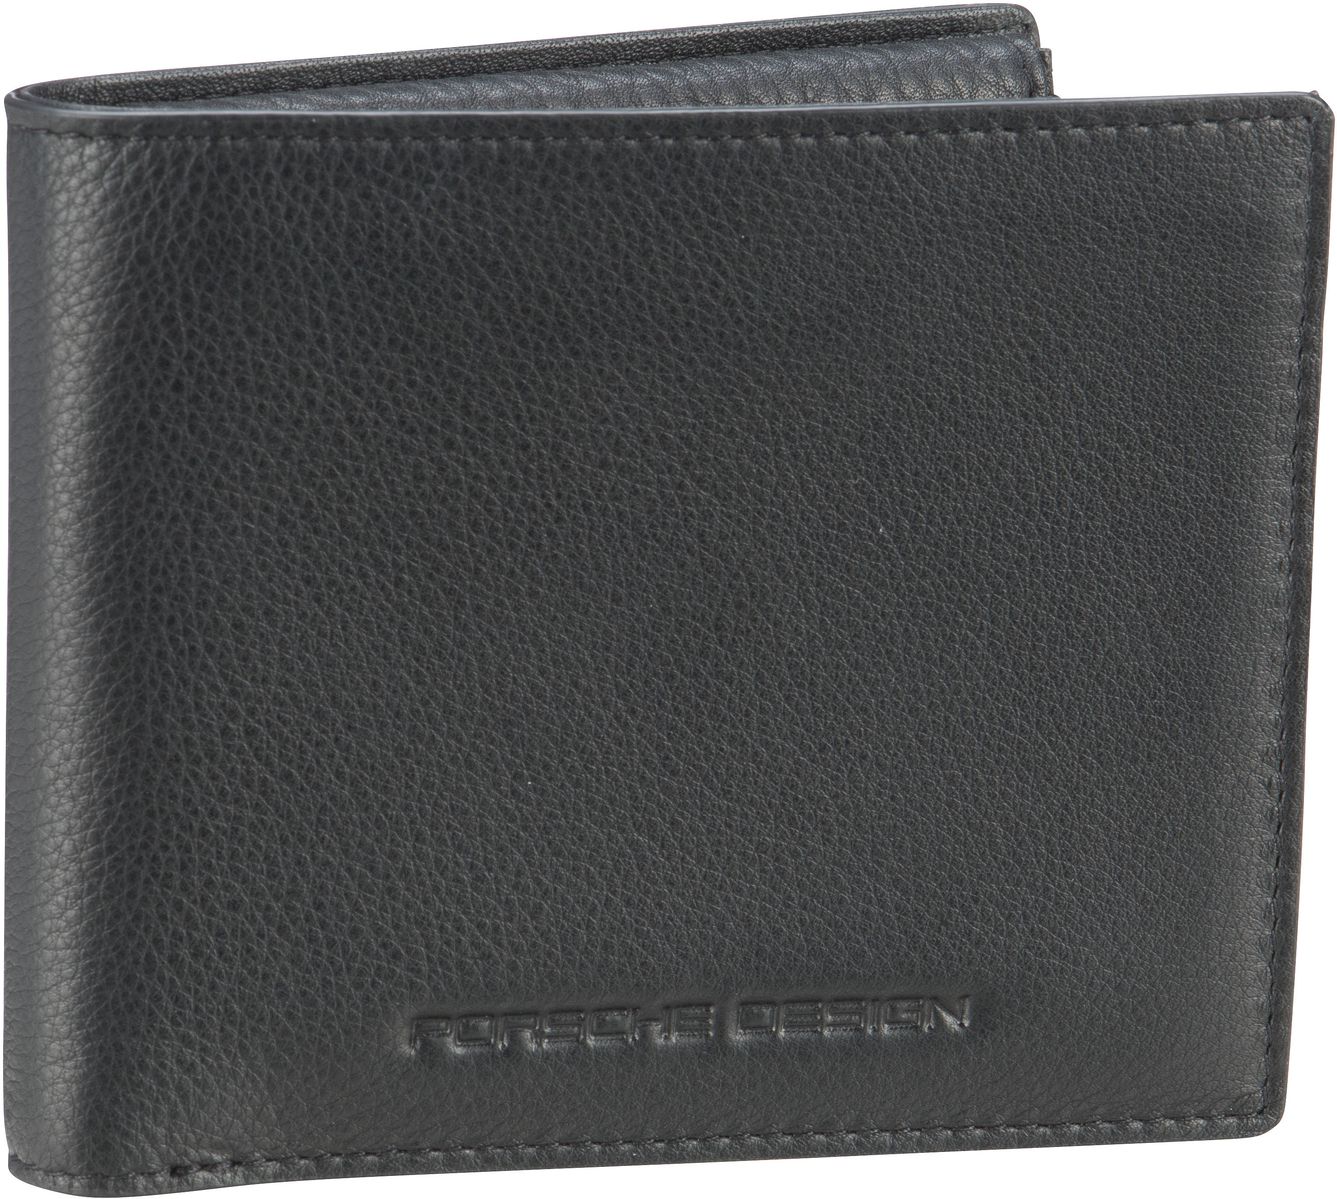 Porsche Design Business Wallet 9903 - Black